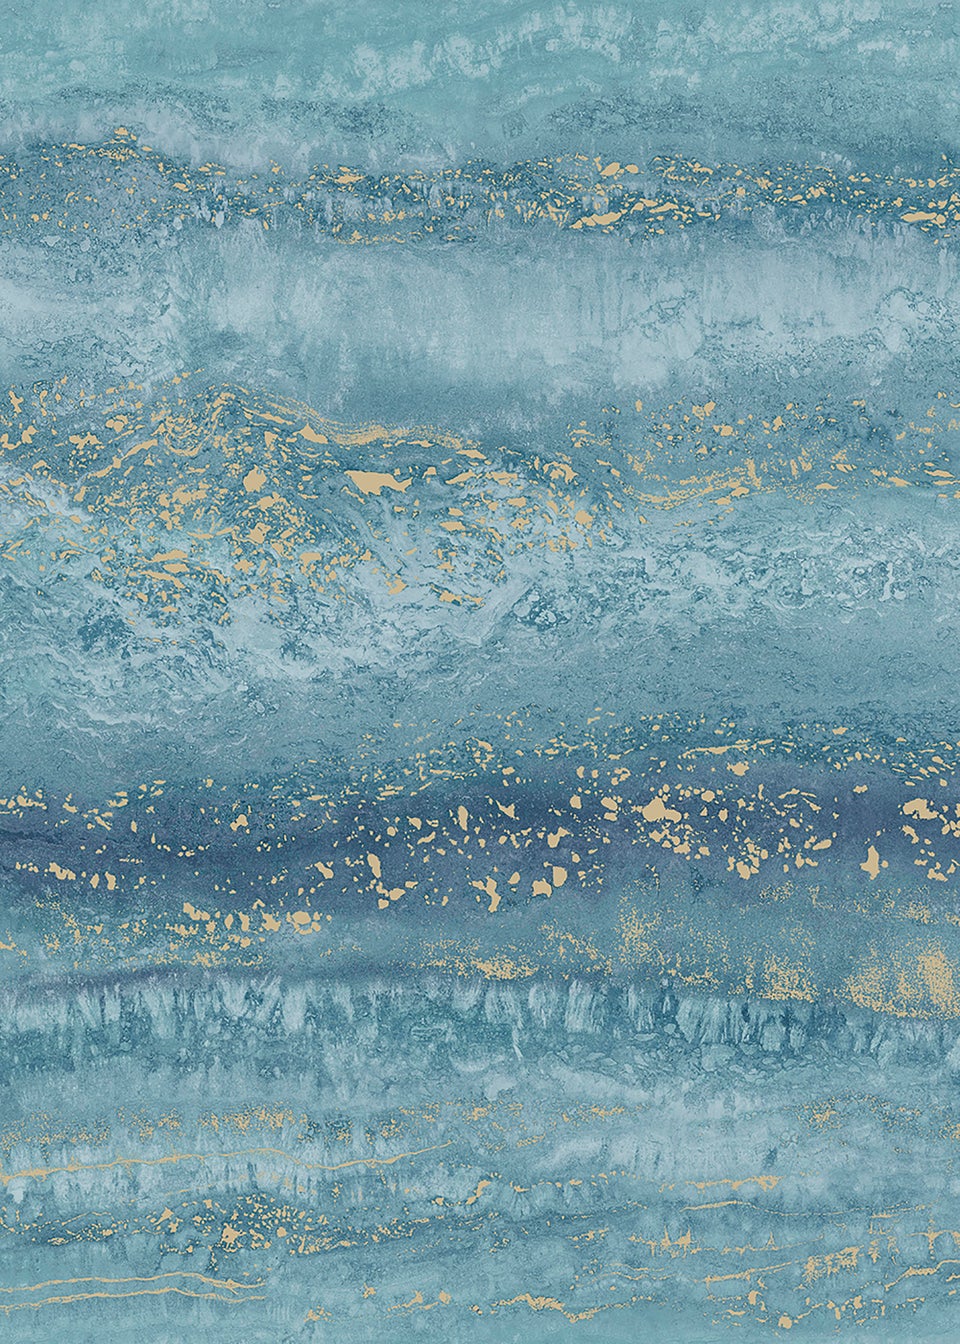 Muriva Semper Marble Wallpaper